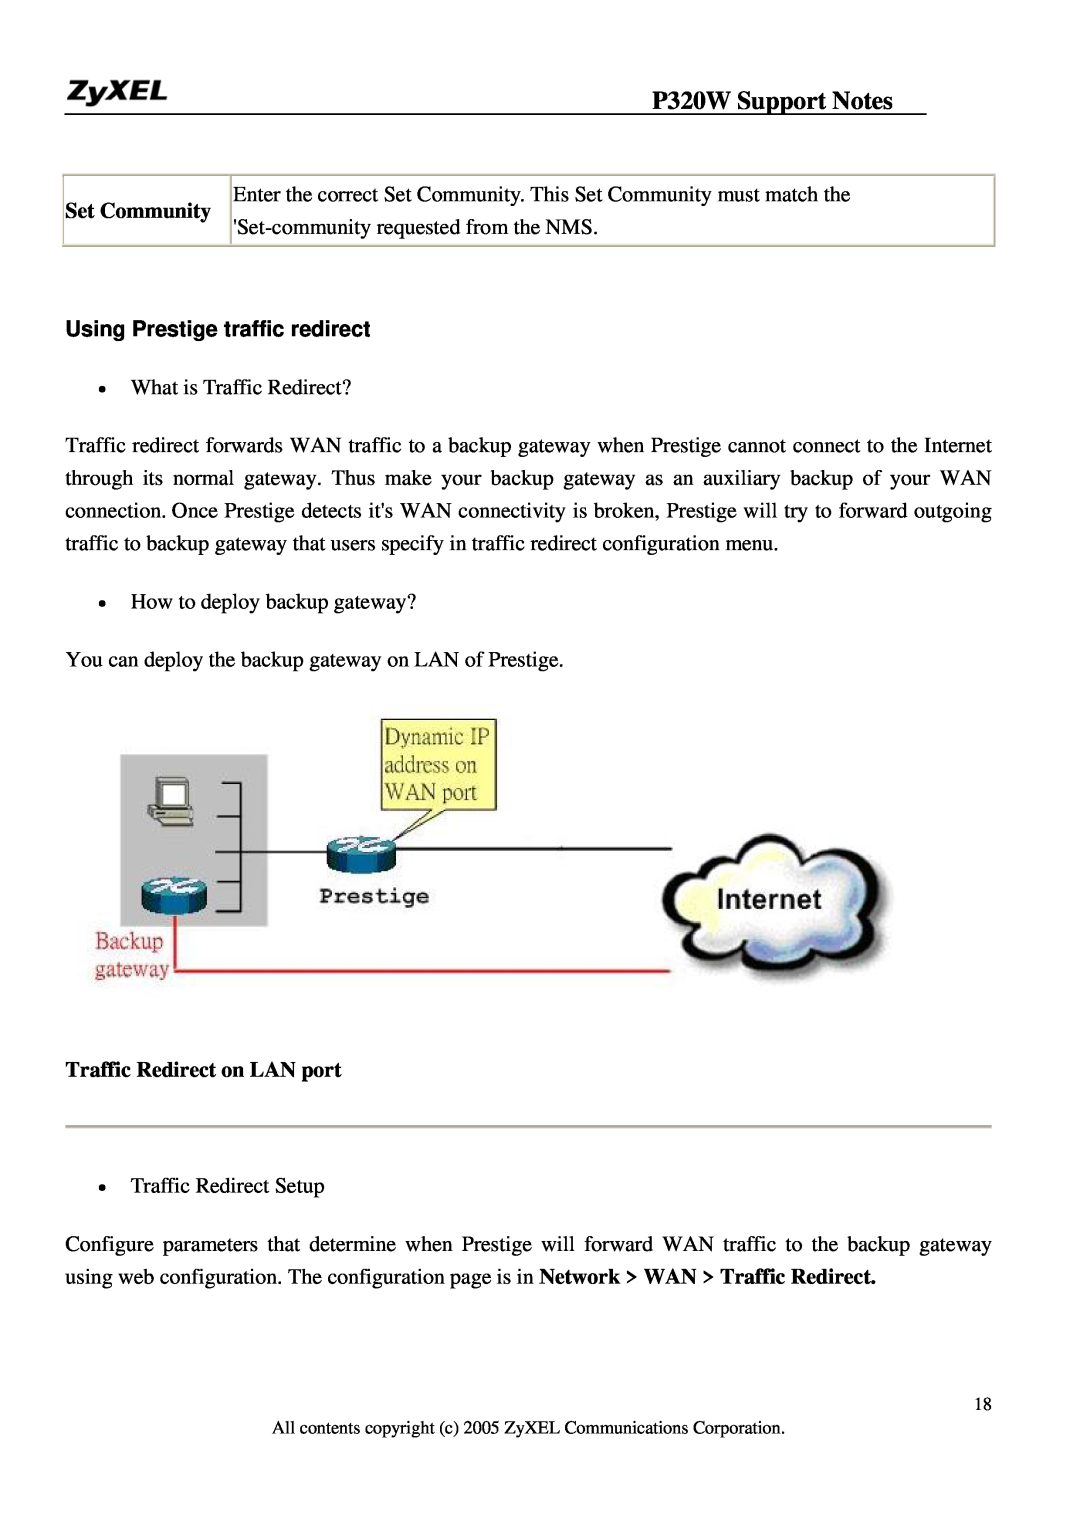 ZyXEL Communications 320W manual Set Community, Using Prestige traffic redirect, Traffic Redirect on LAN port 